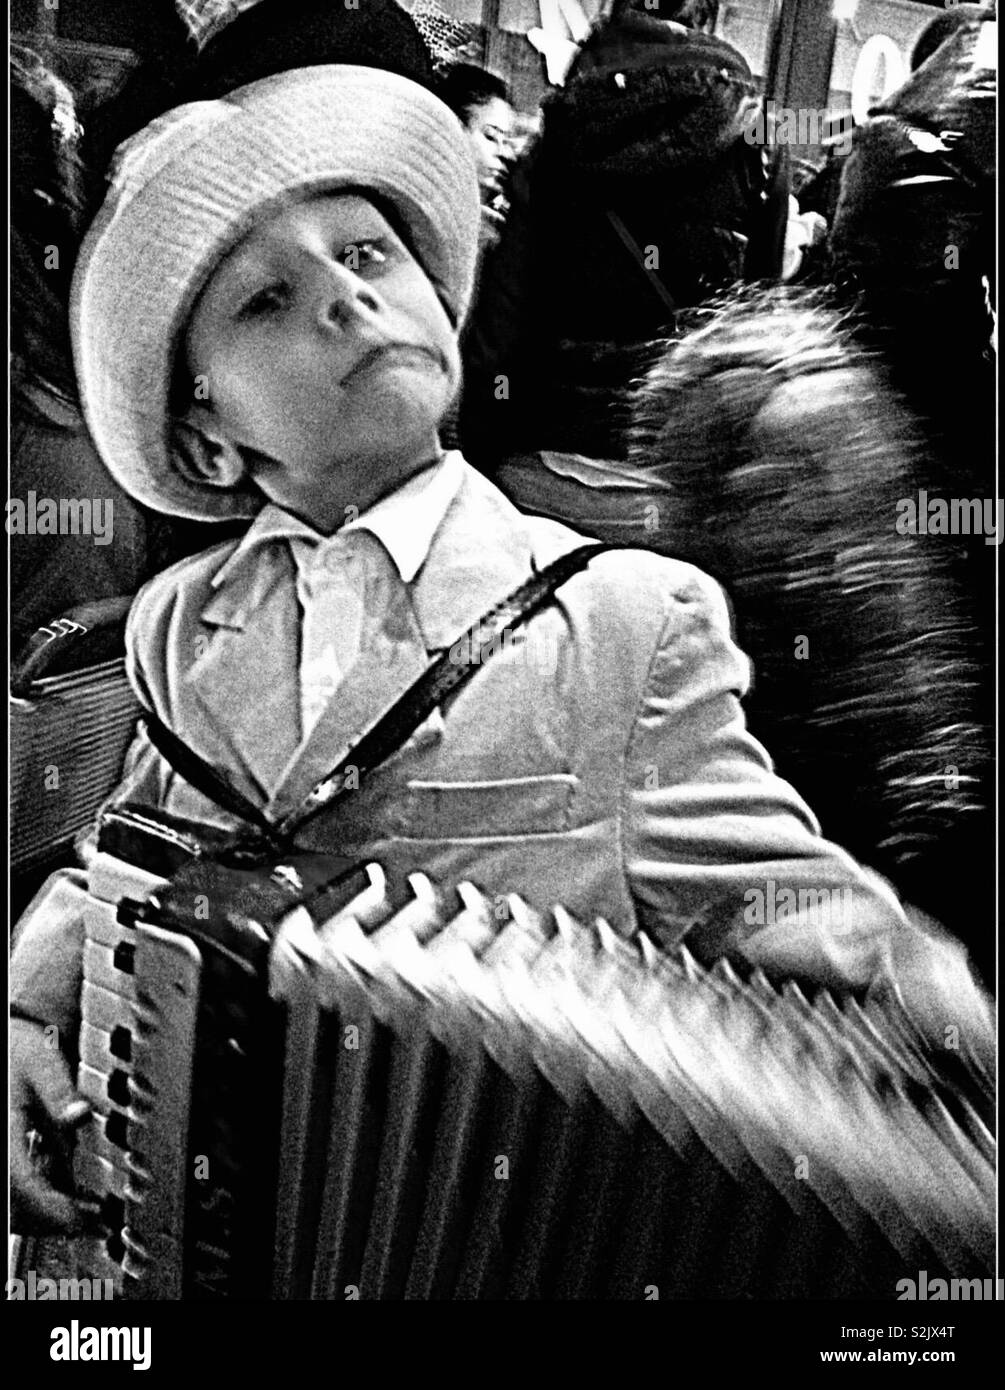 Child accordionist Street musician Stock Photo